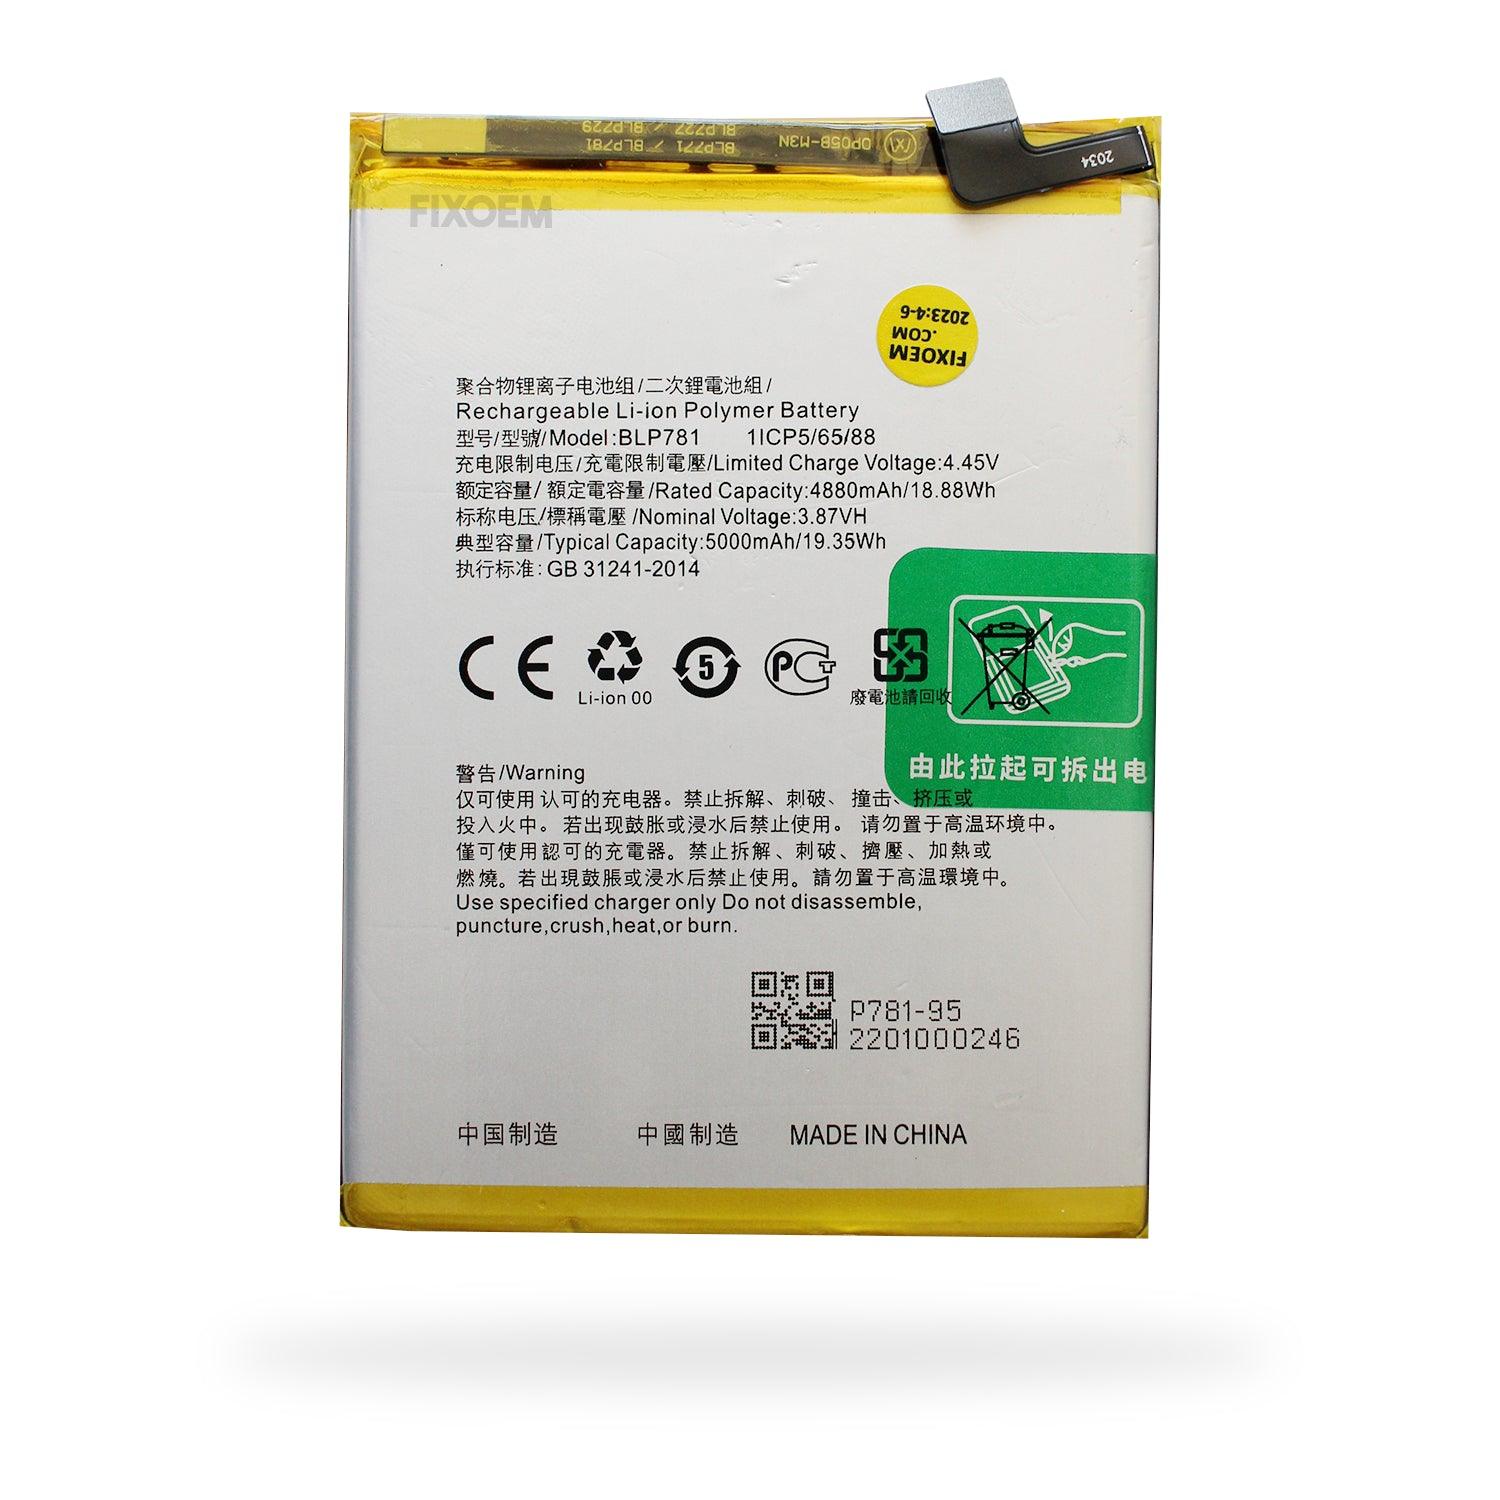 Bateria Oppo A52/A92 /A72 4G Cph2061 Cph2069 Cph2059 Cph2067 Blp781 a solo $ 130.00 Refaccion y puestos celulares, refurbish y microelectronica.- FixOEM